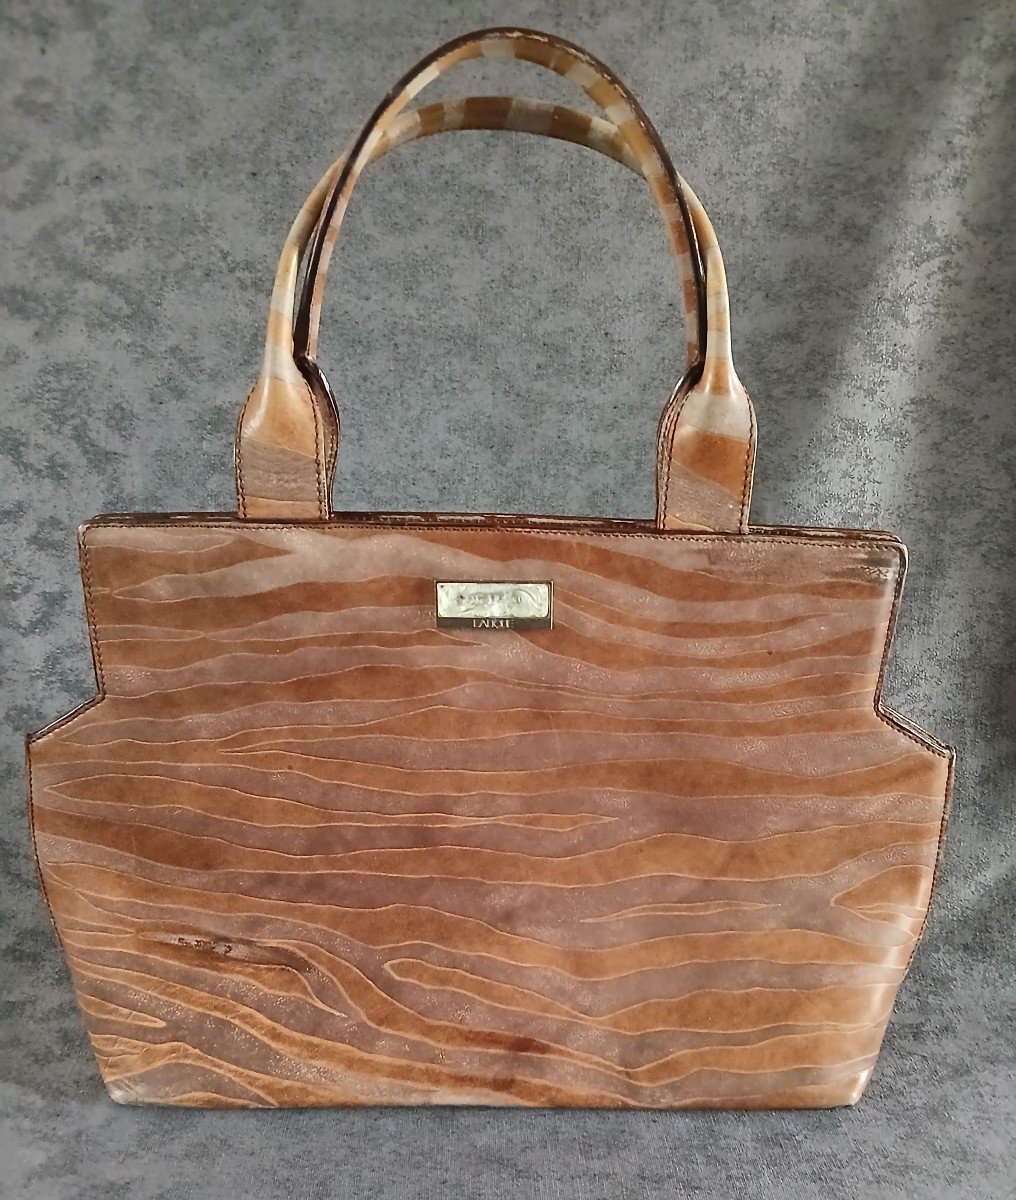 Lalique- Leather Handbag “leopard” Model